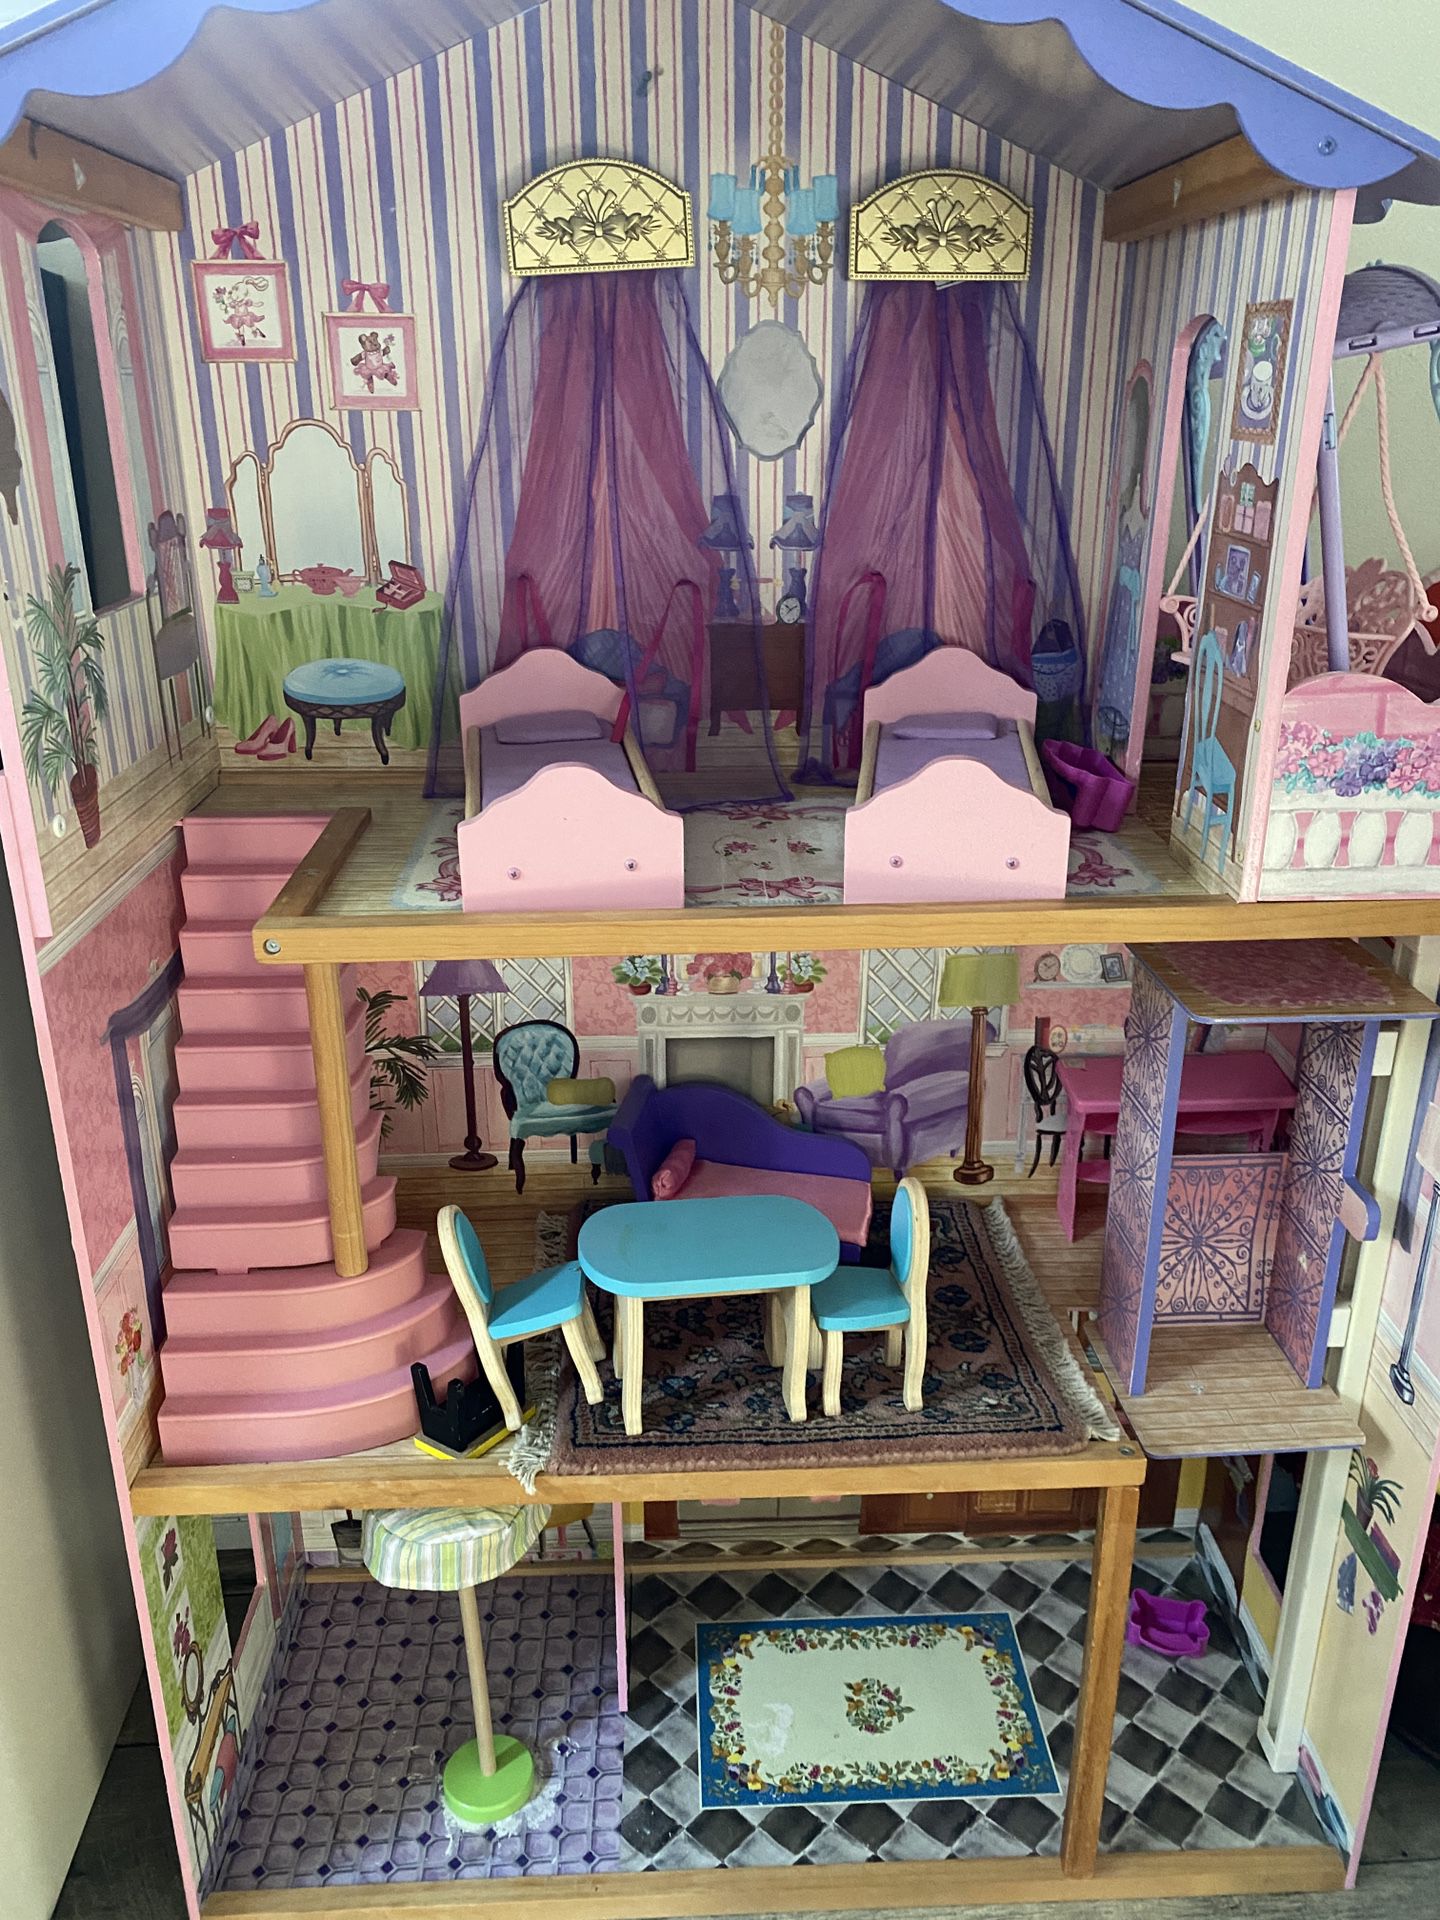 Barbie doll house